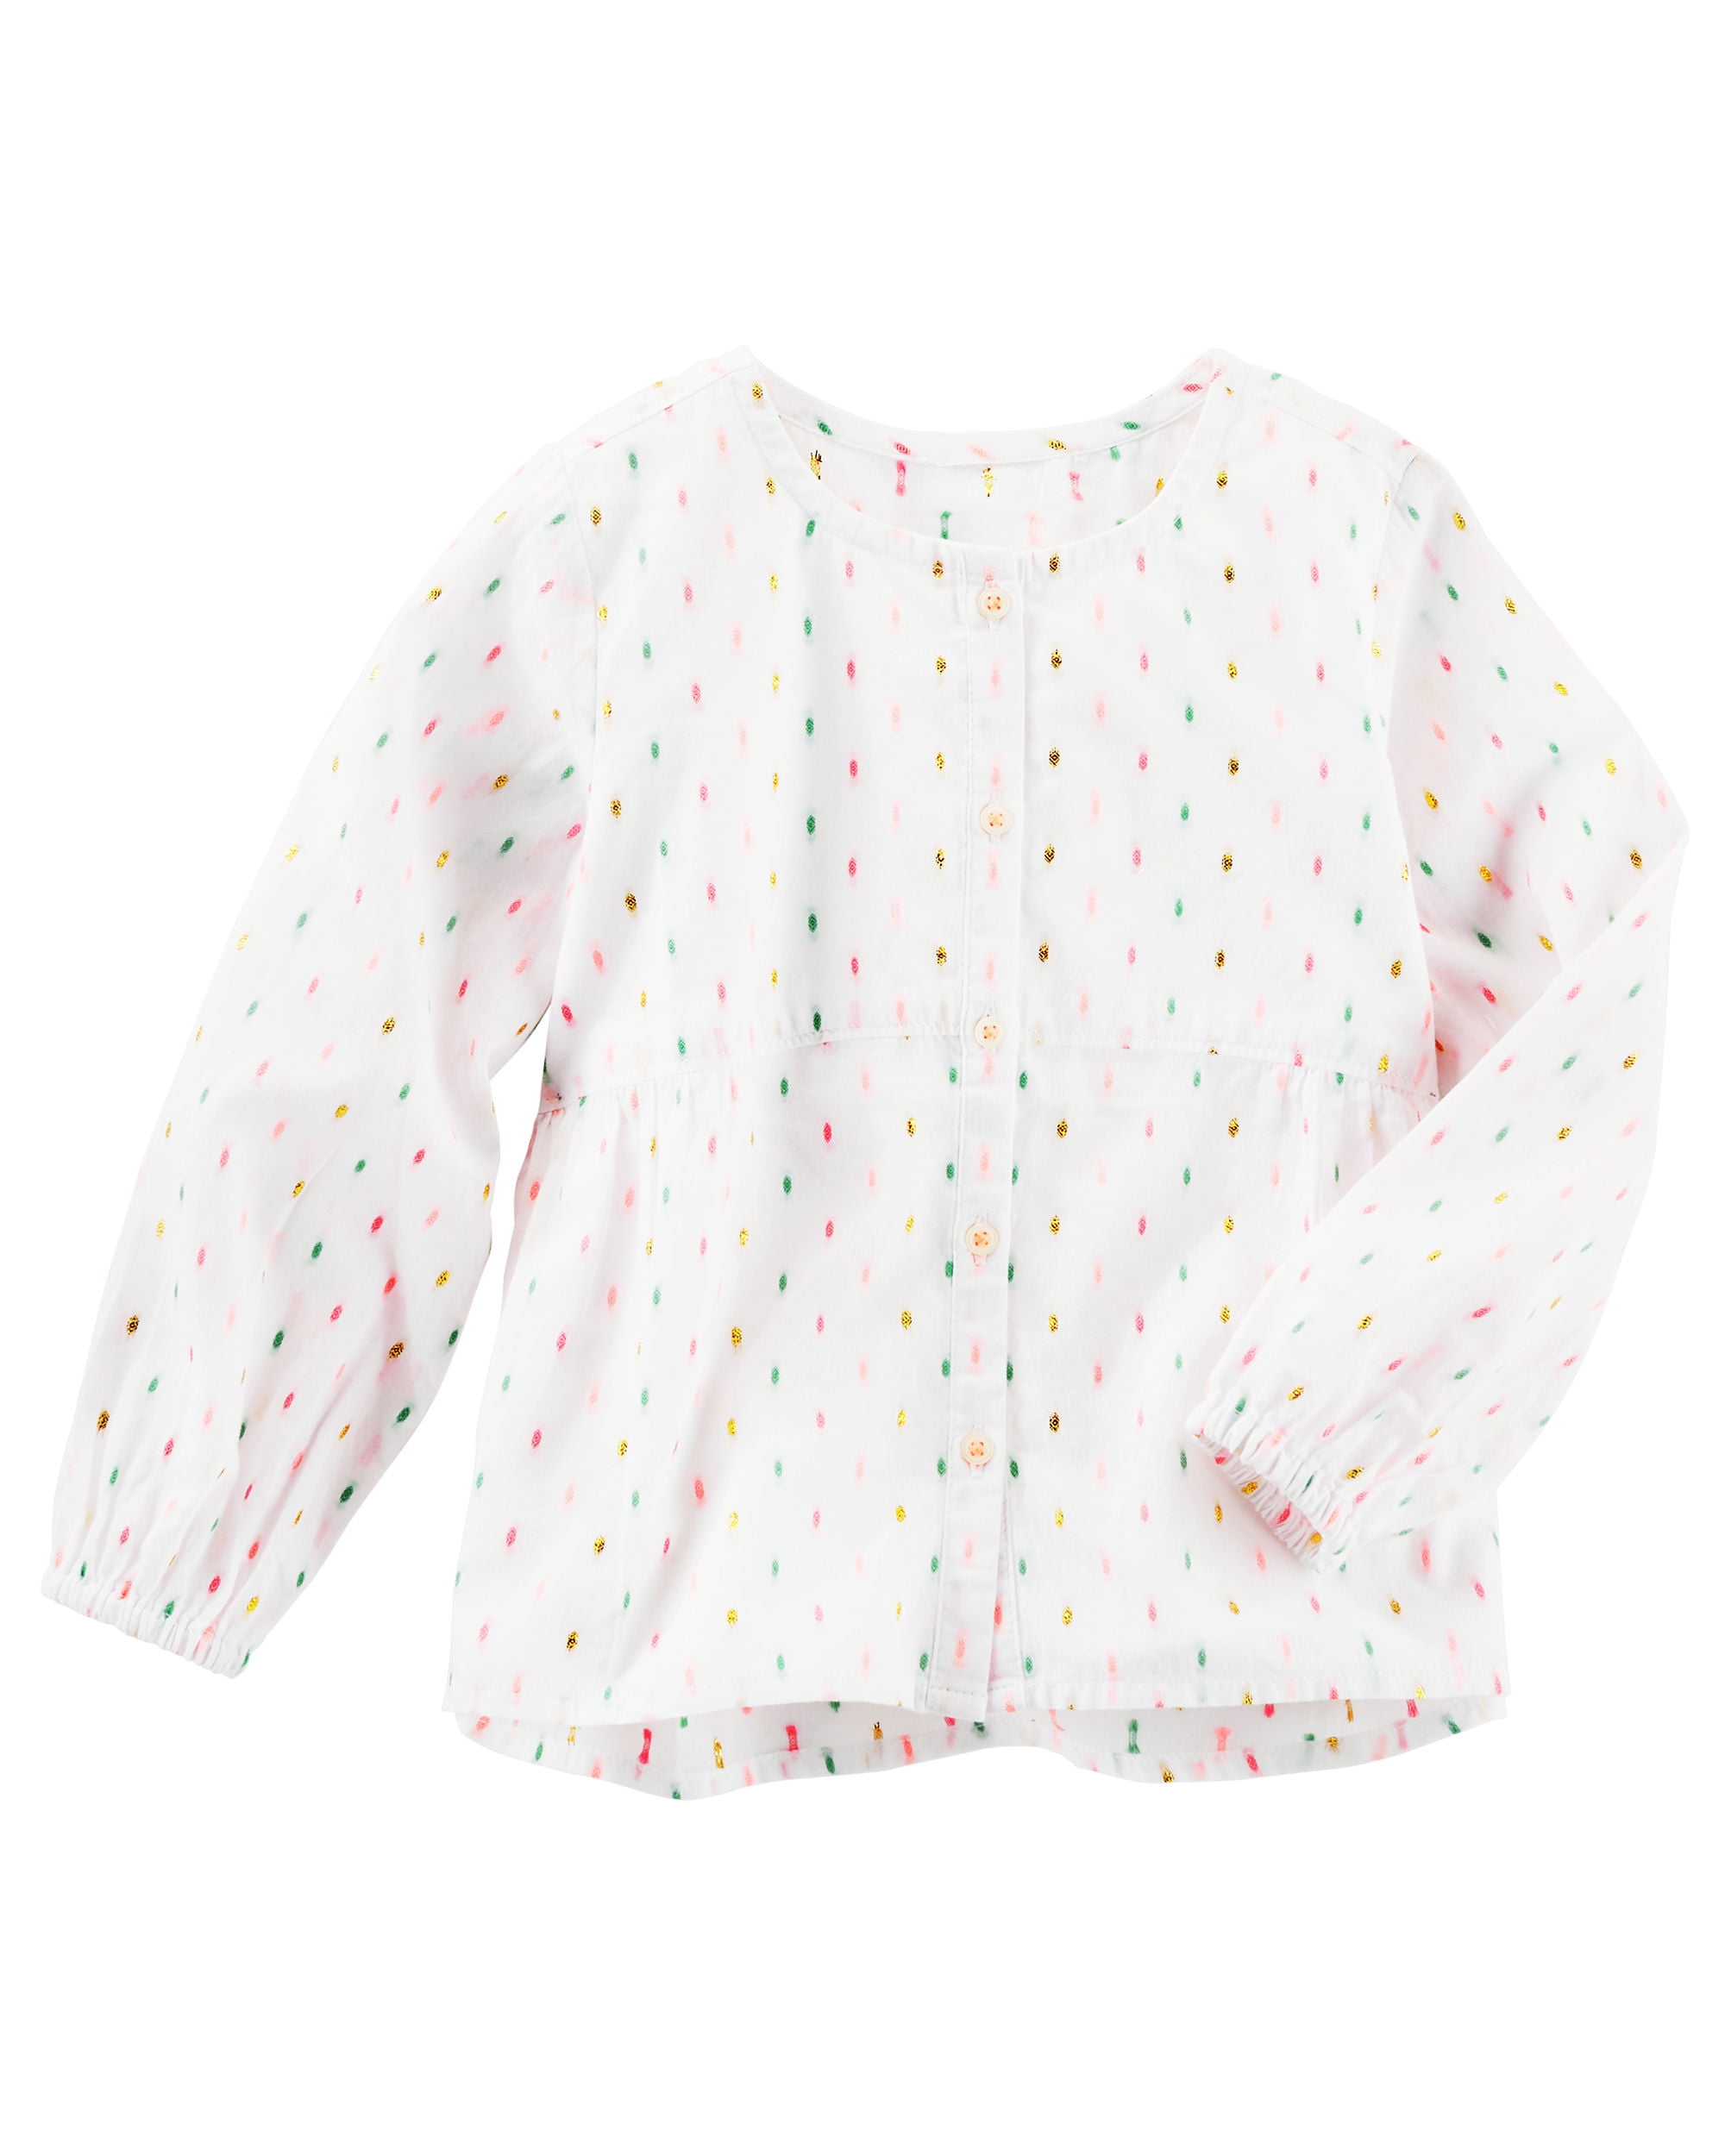 NEW Sweater Toddler Girl Pink Cardigan OshKosh Osh Kosh  NWT Size 12m 18m 3T 